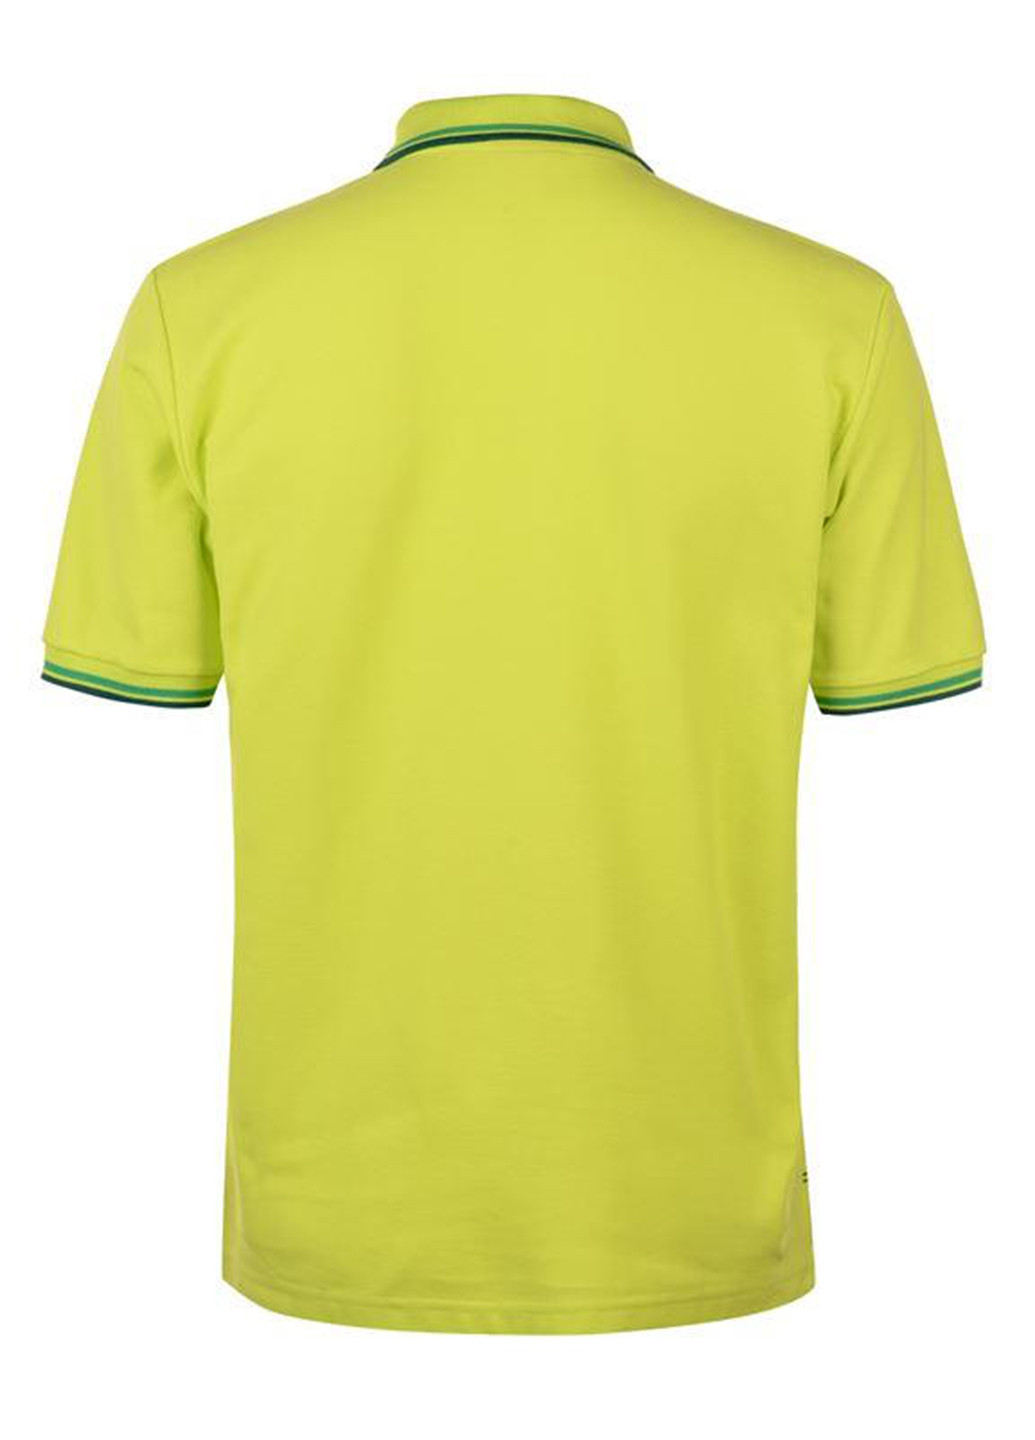 Лимонно-зеленая футболка-поло для мужчин Slazenger однотонная